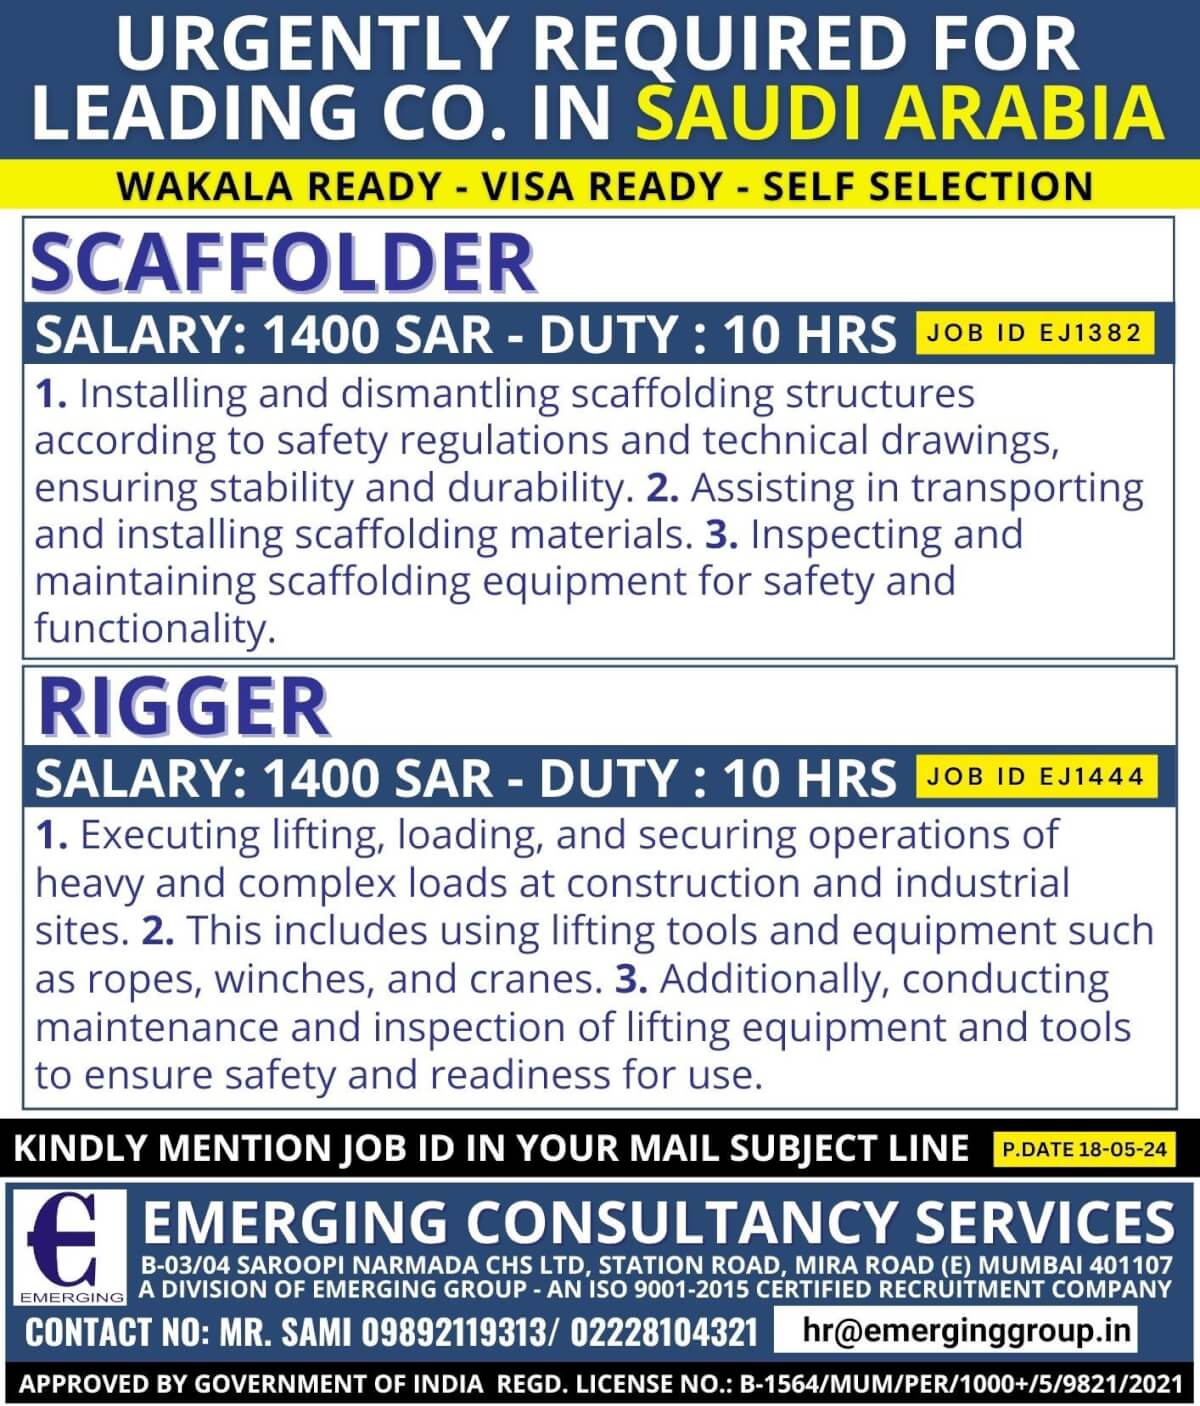 URGENTLY REQUIRED FOR LEADING COMAPNY IN SAUDI ARABIA - WAKALA READY - VISA READY